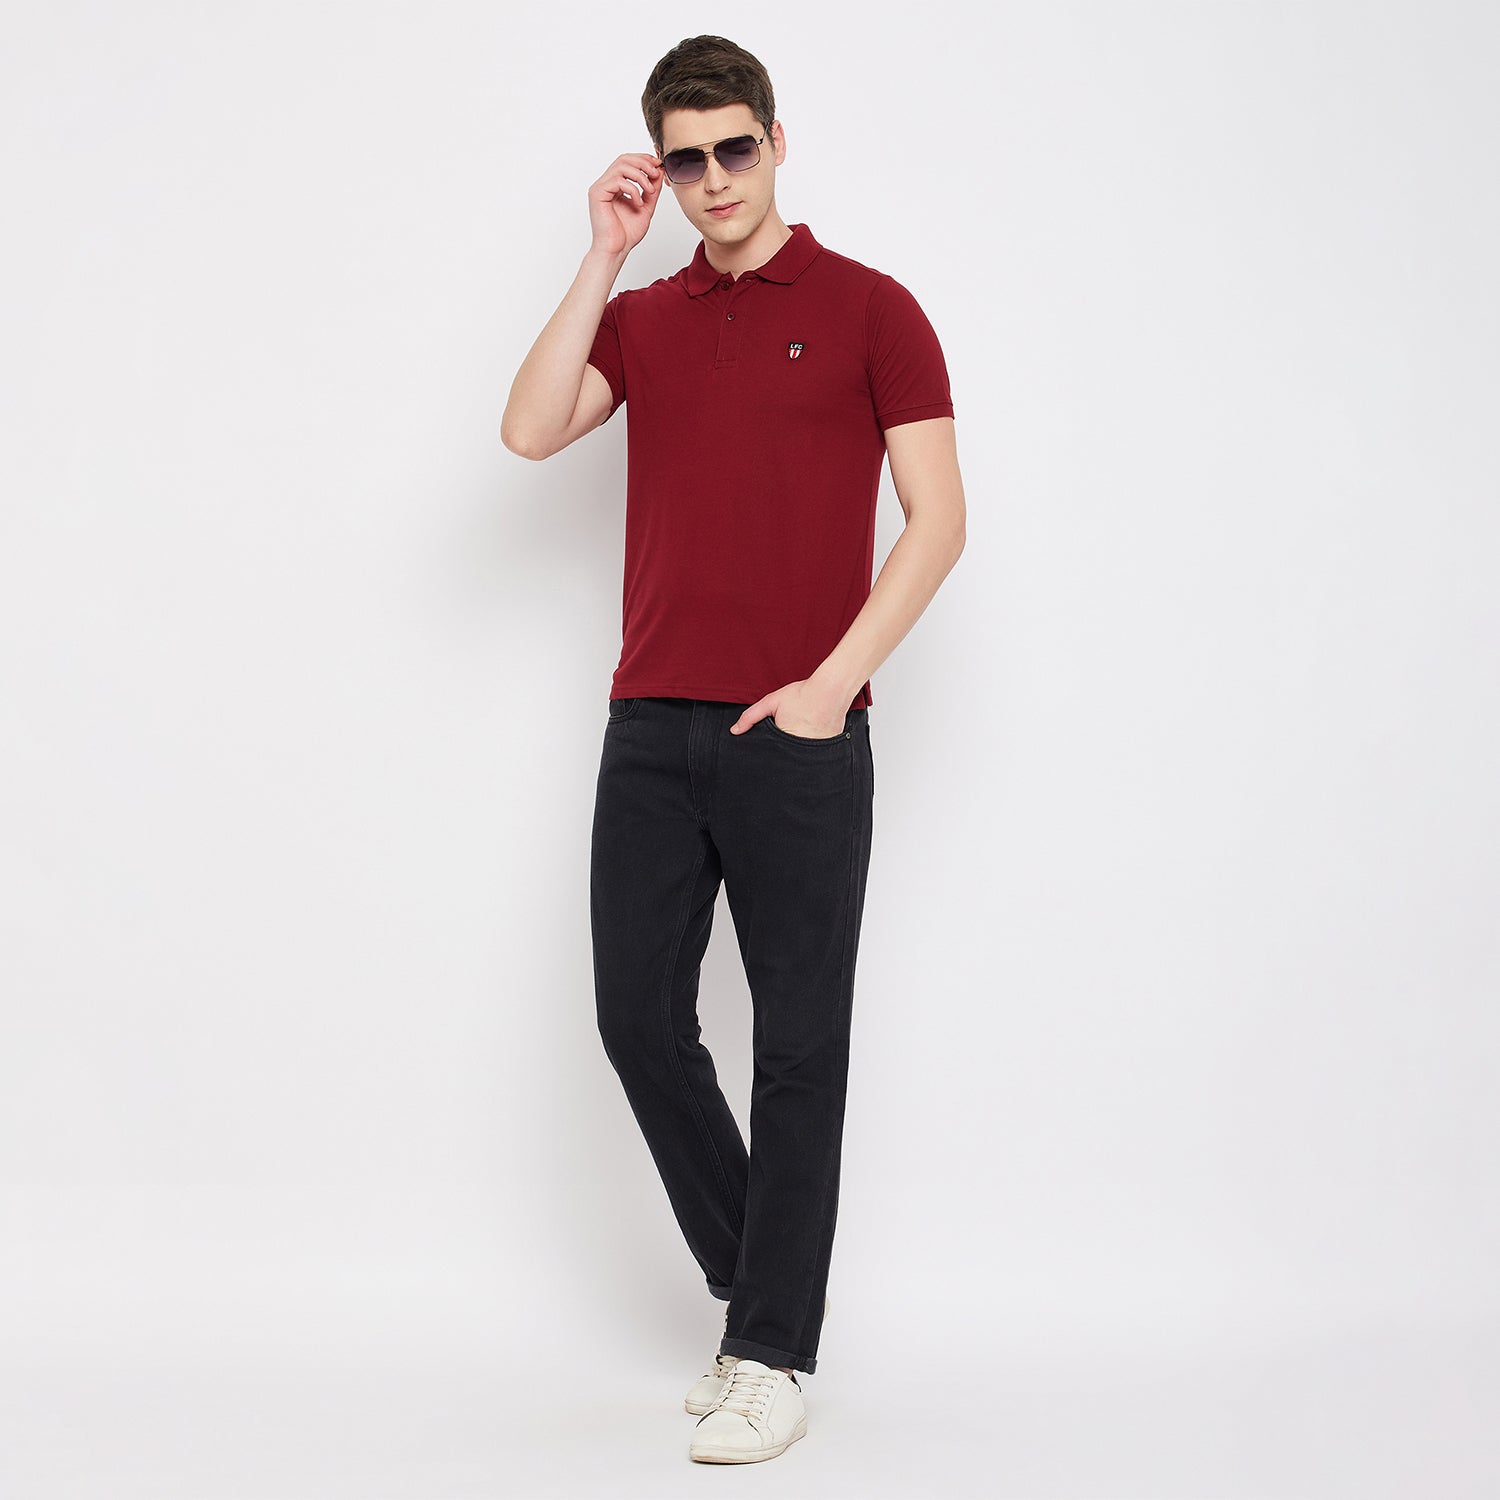 LivFree Men's T-Shirt Polo Neck Half Sleeves in Solid pattern  - Maroon